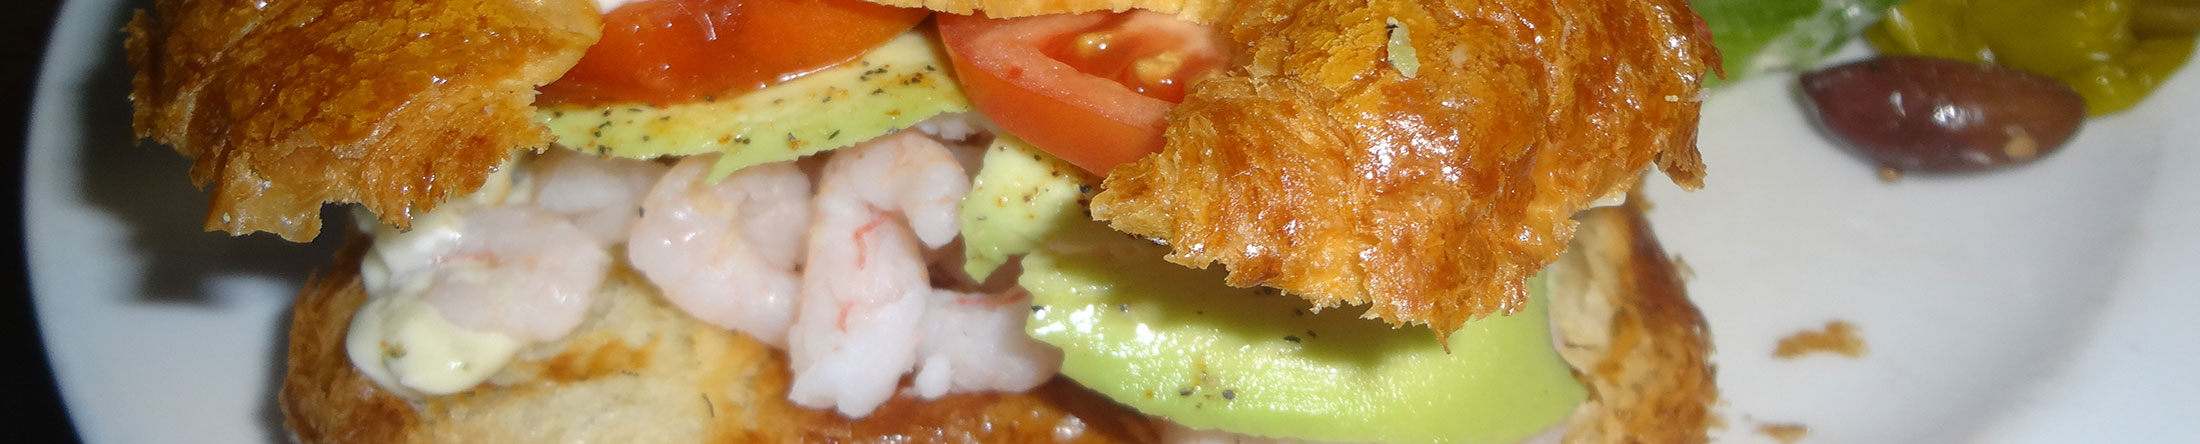 Shrimp and Avocado Croissant at Kisamos Taverna